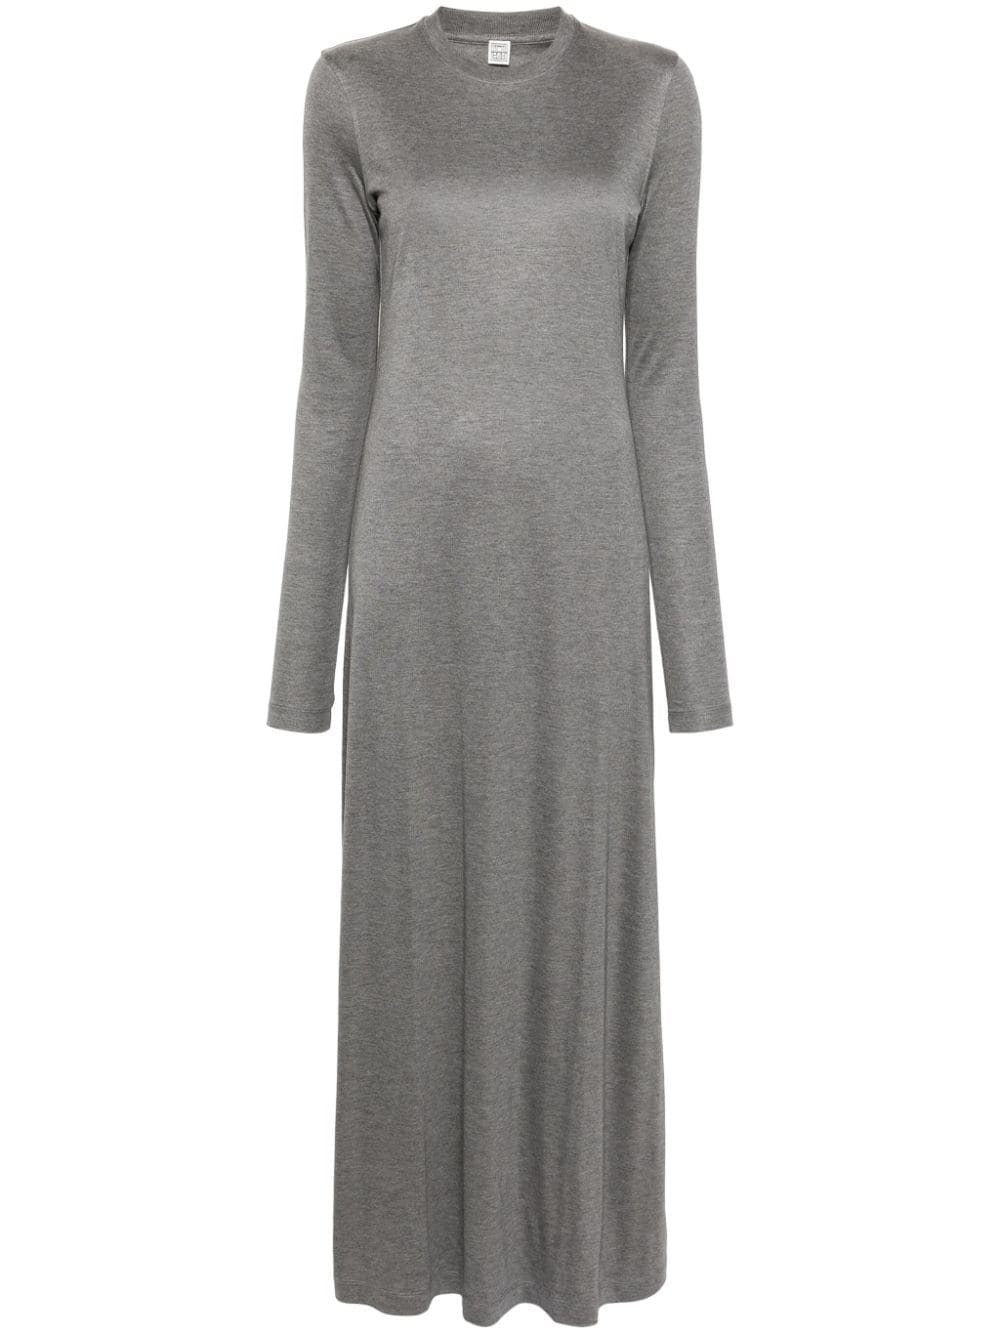 TOTEME-Long-Sleeve Jersey Dress-